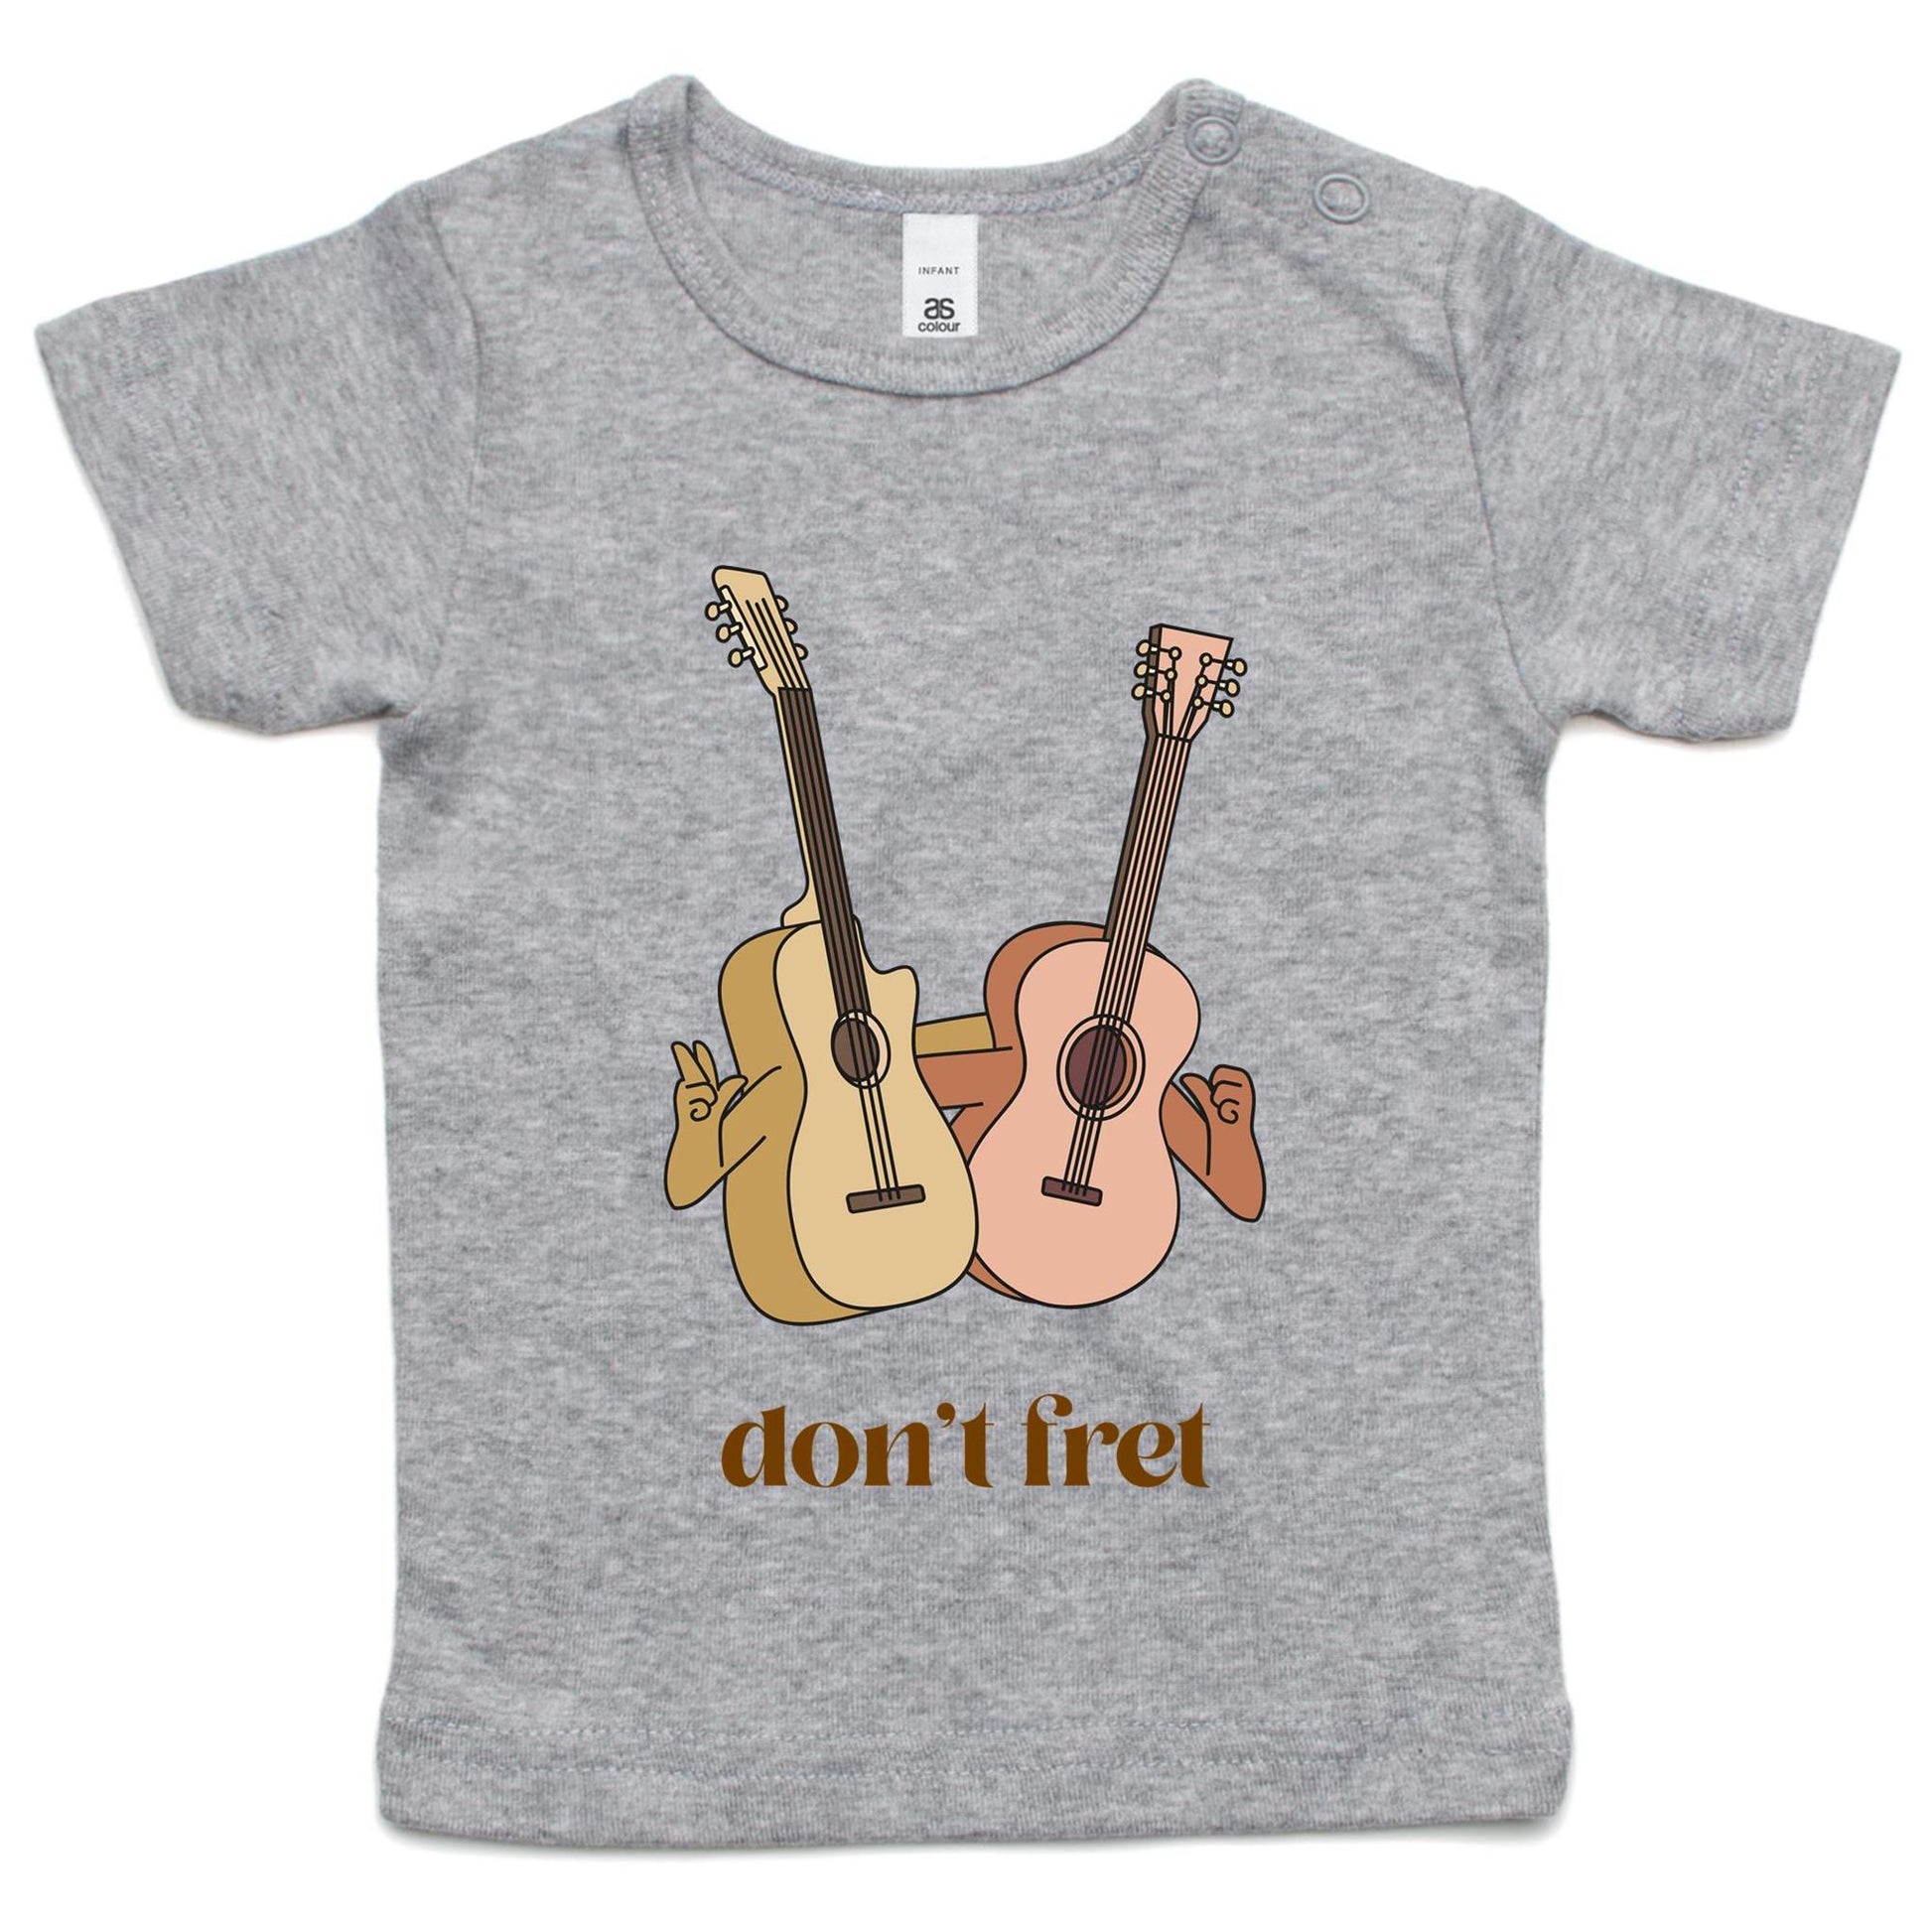 Don't Fret - Baby T-shirt Grey Marle Baby T-shirt Music